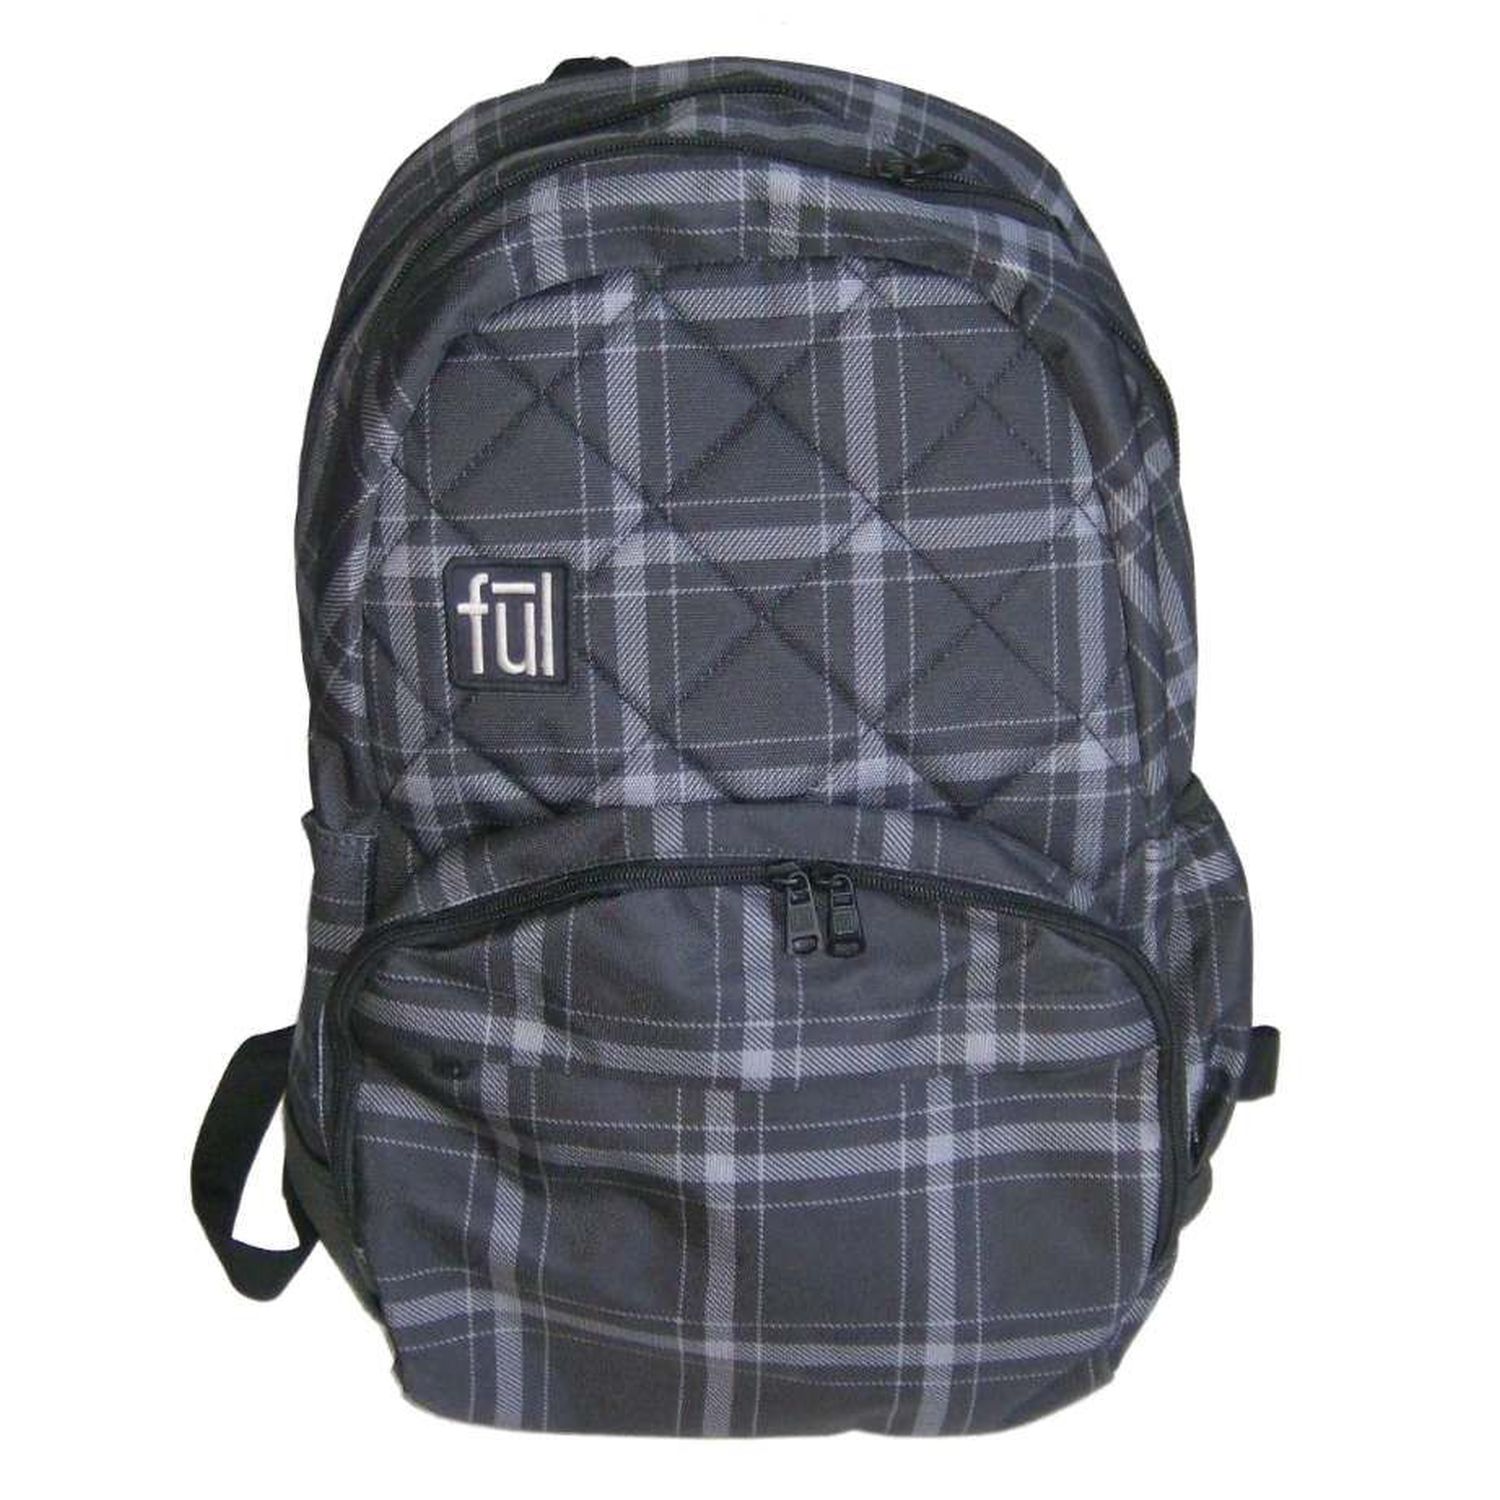 Ful Black & Gray Plaid Backpack Sport School Travel Back Pack - image 1 of 1